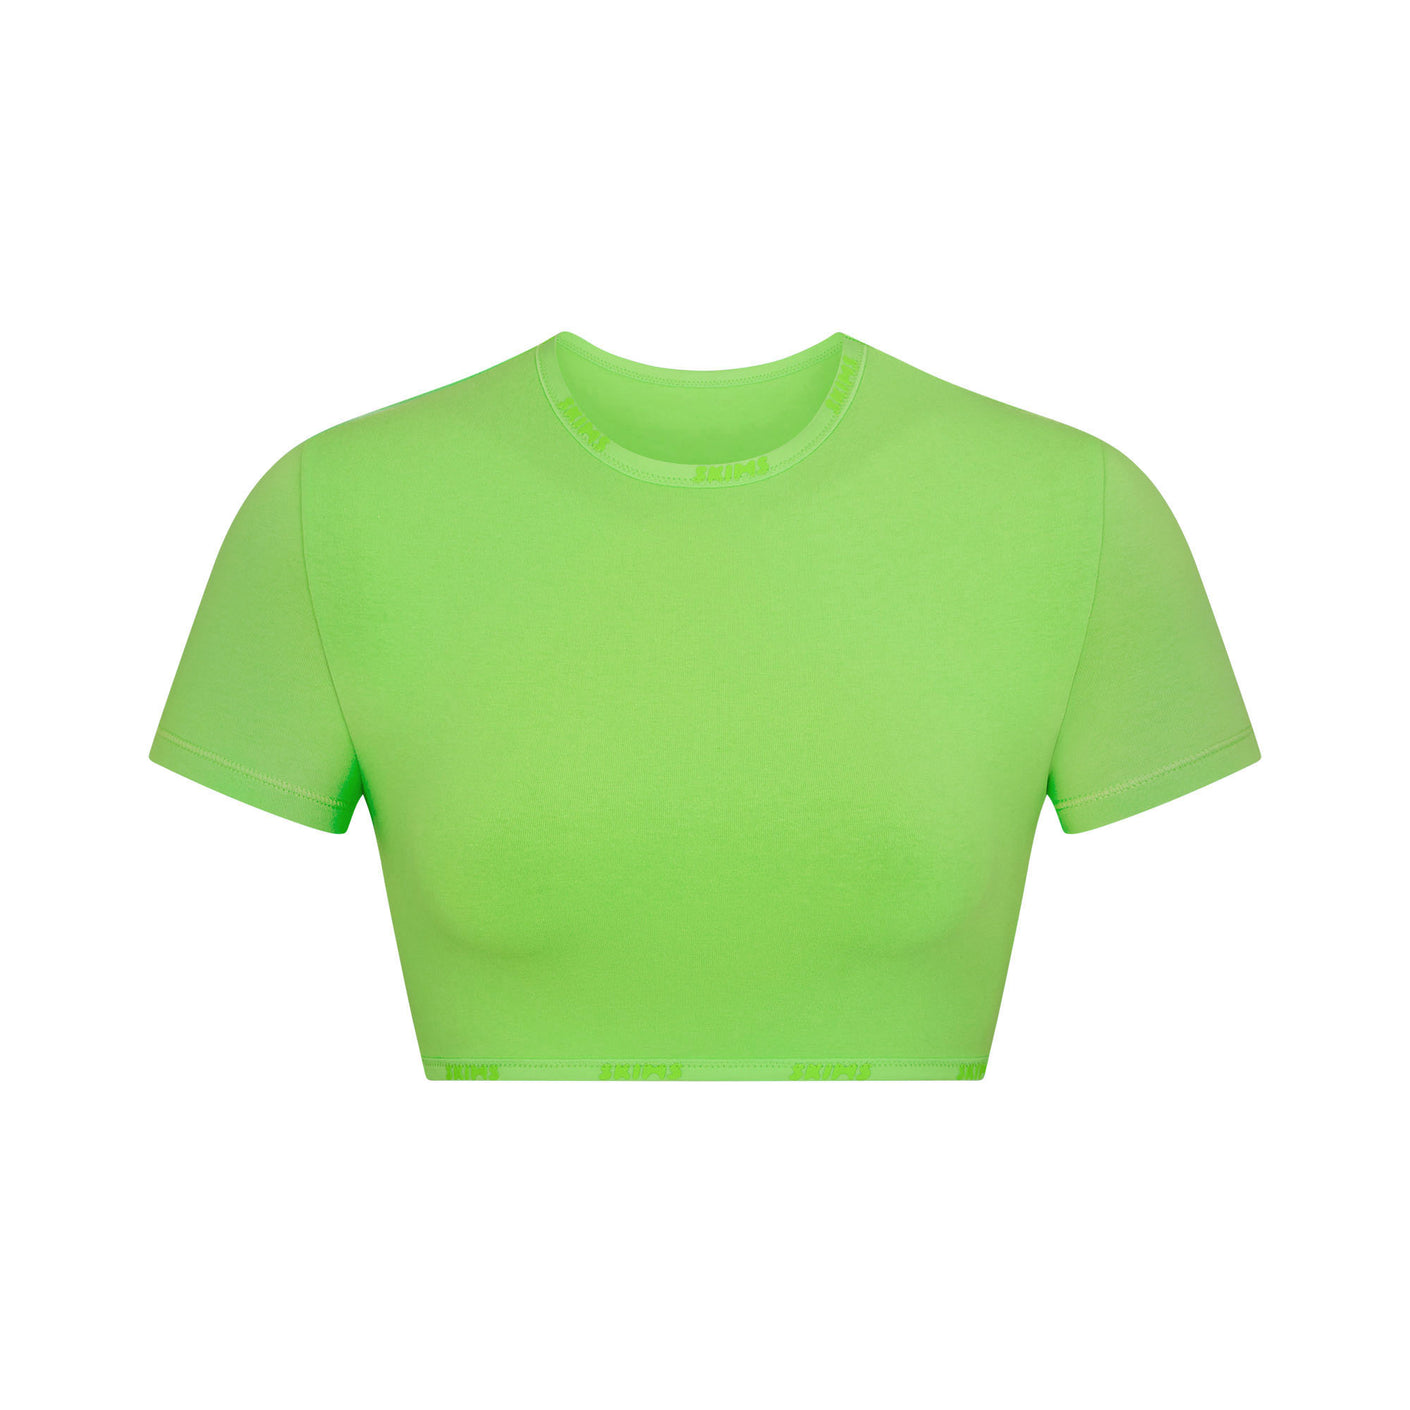 Track Cotton Logo Bodysuit - Neon Green - L at Skims